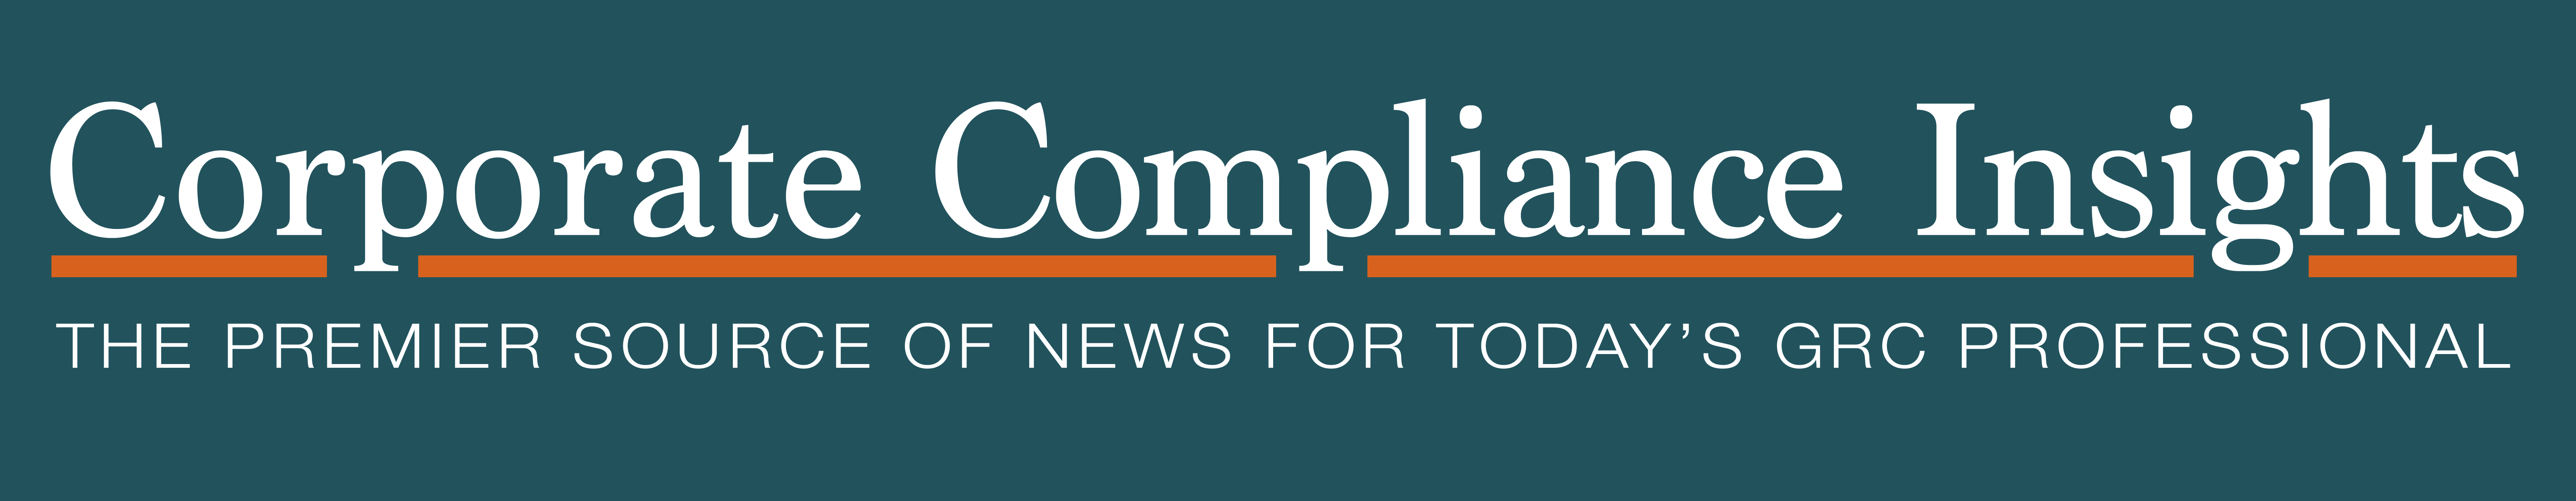 Corporate Compliance Insights_logo